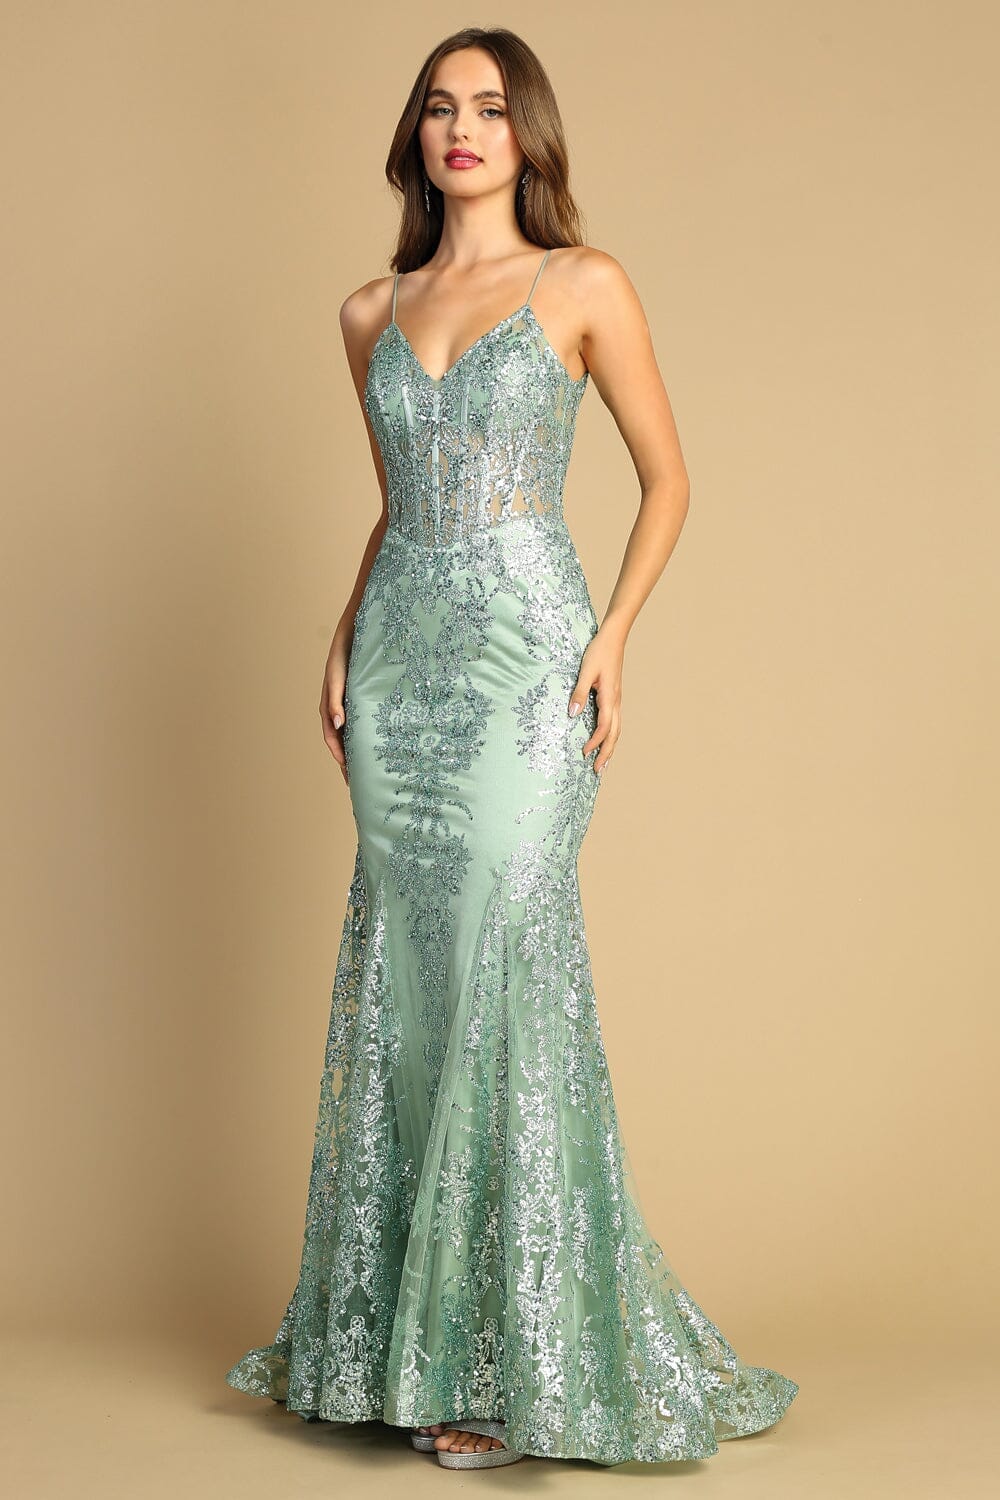 Glitter Print V-Neck Mermaid Dress by Adora 3053N - Outlet